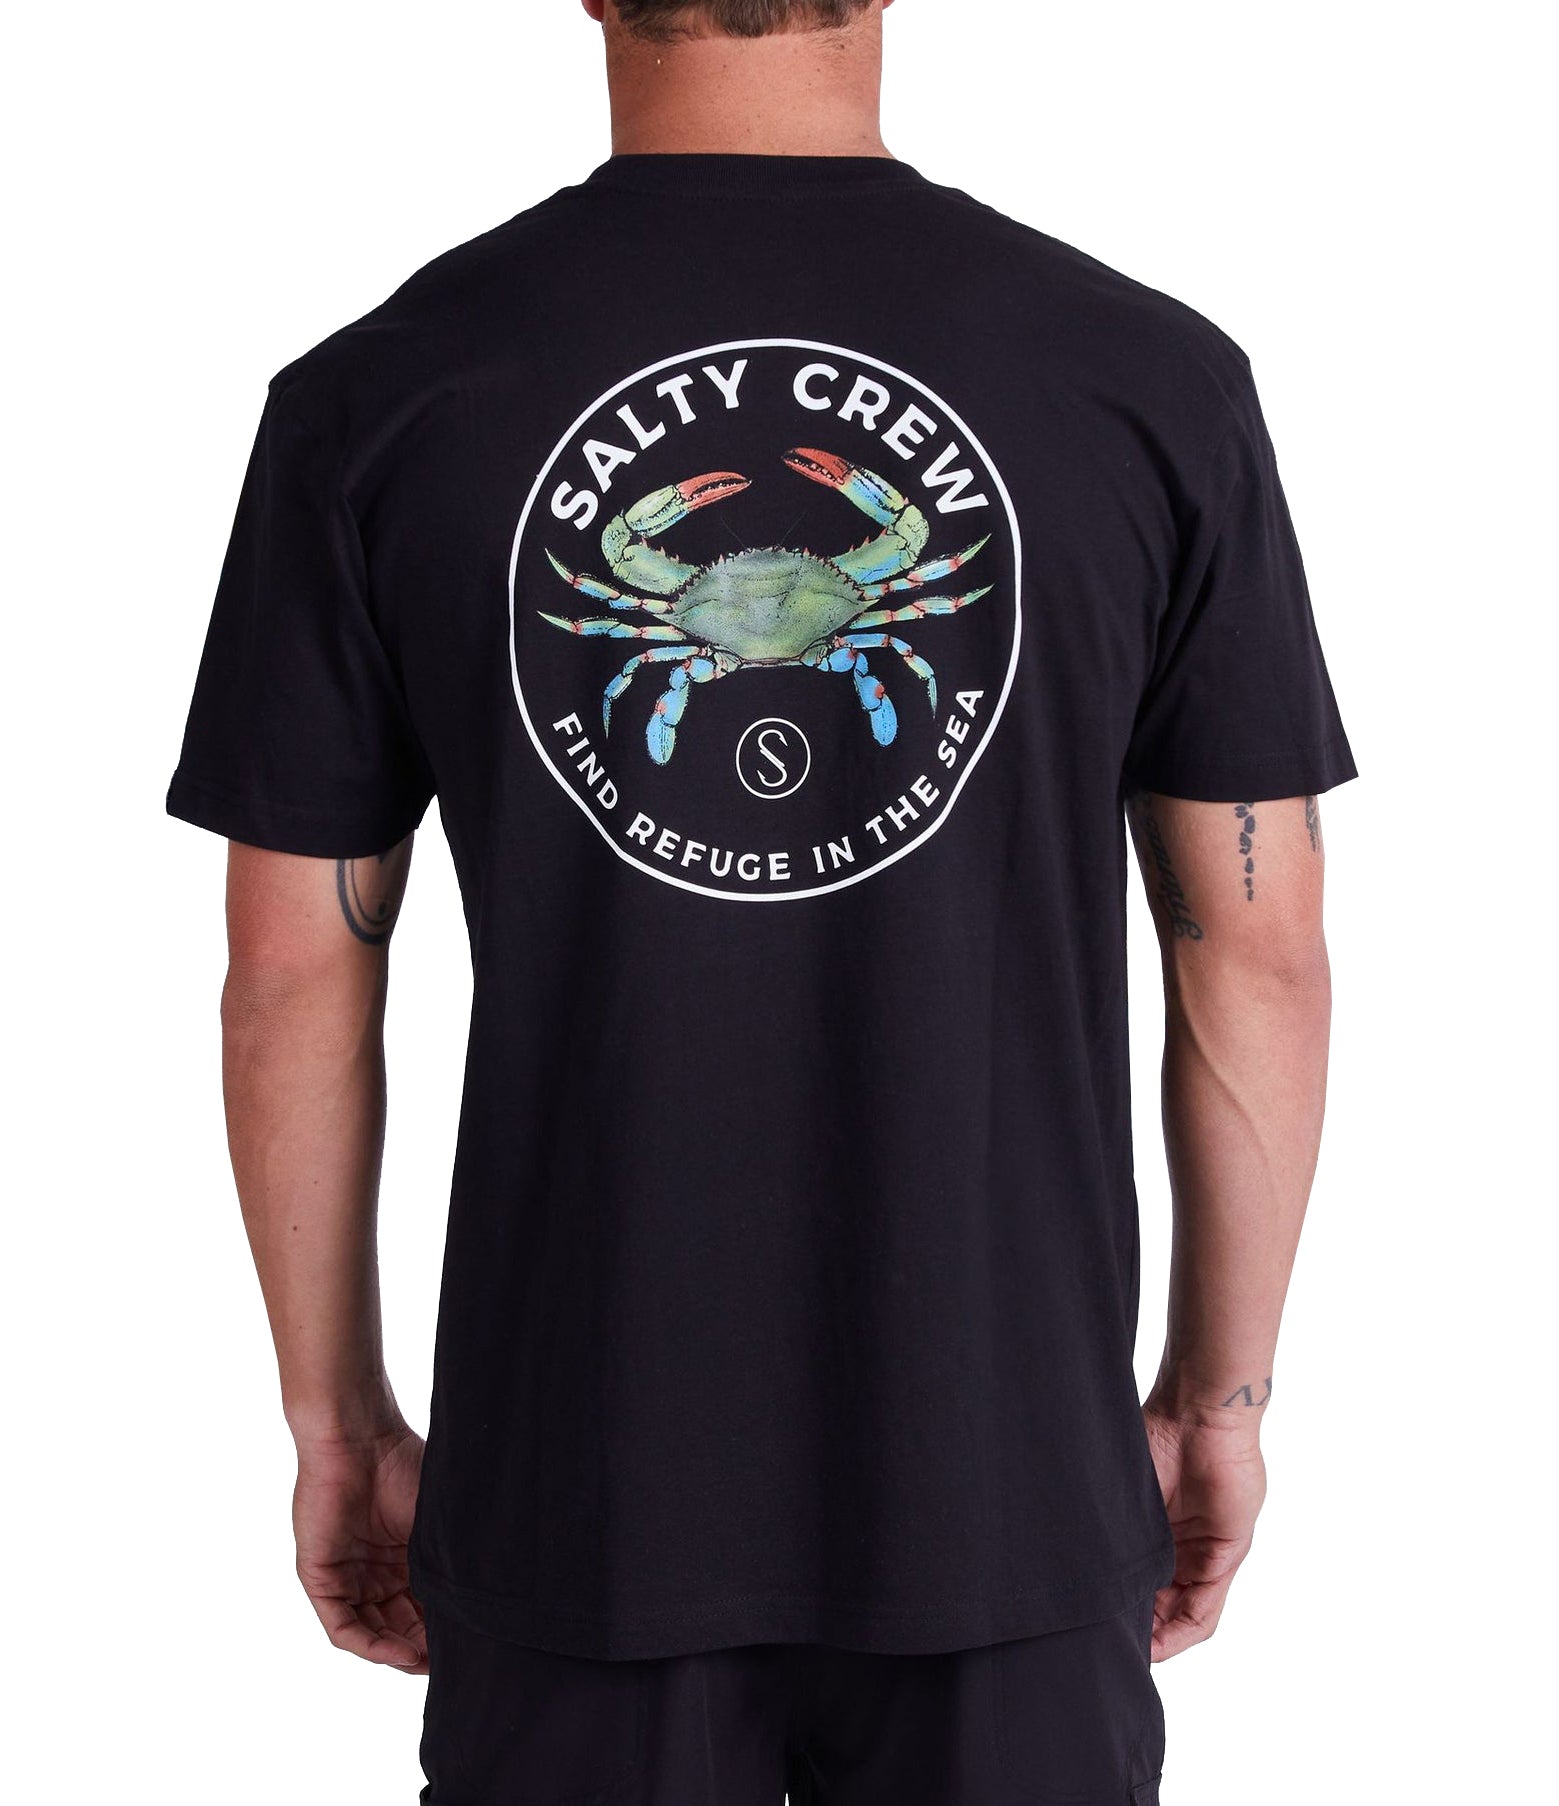 Salty Crew Blue Crabber Premium SS Tee Black XL